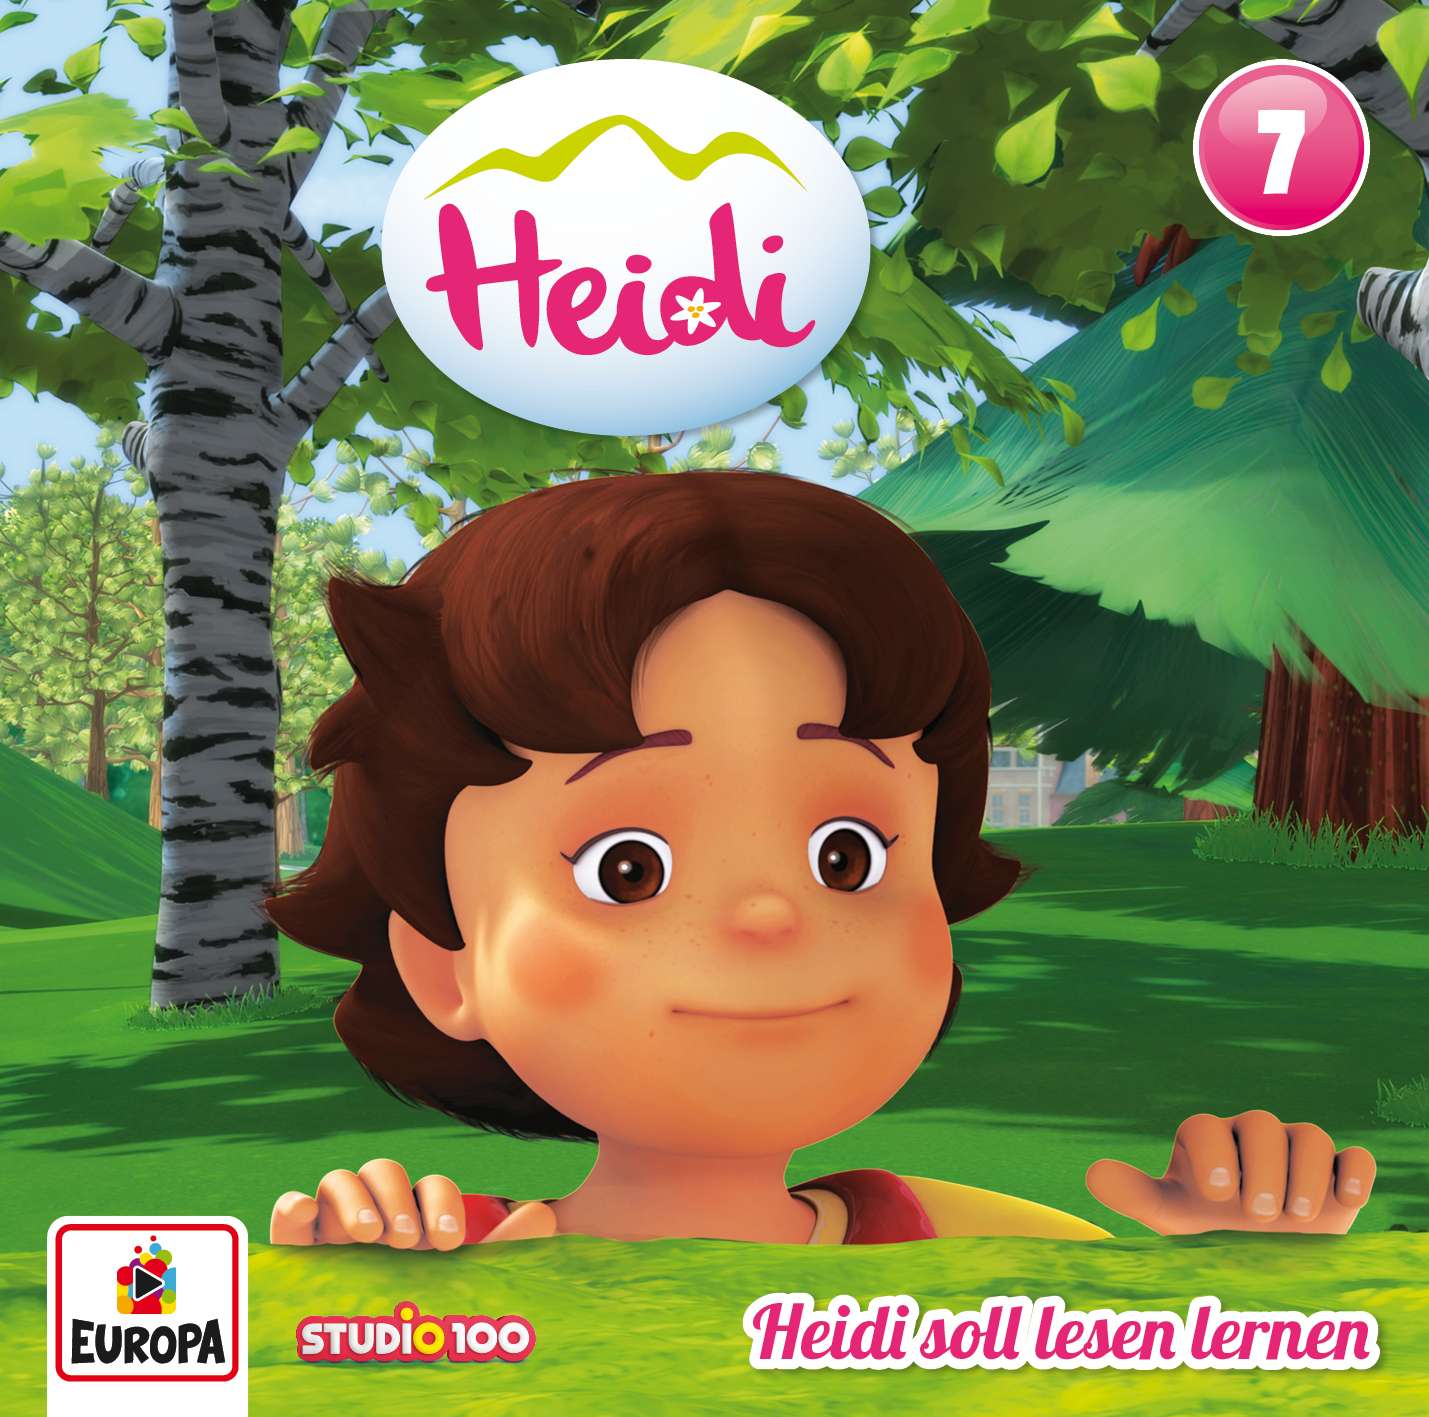 Heidi - Heidi soll lesen lernen (CGI)